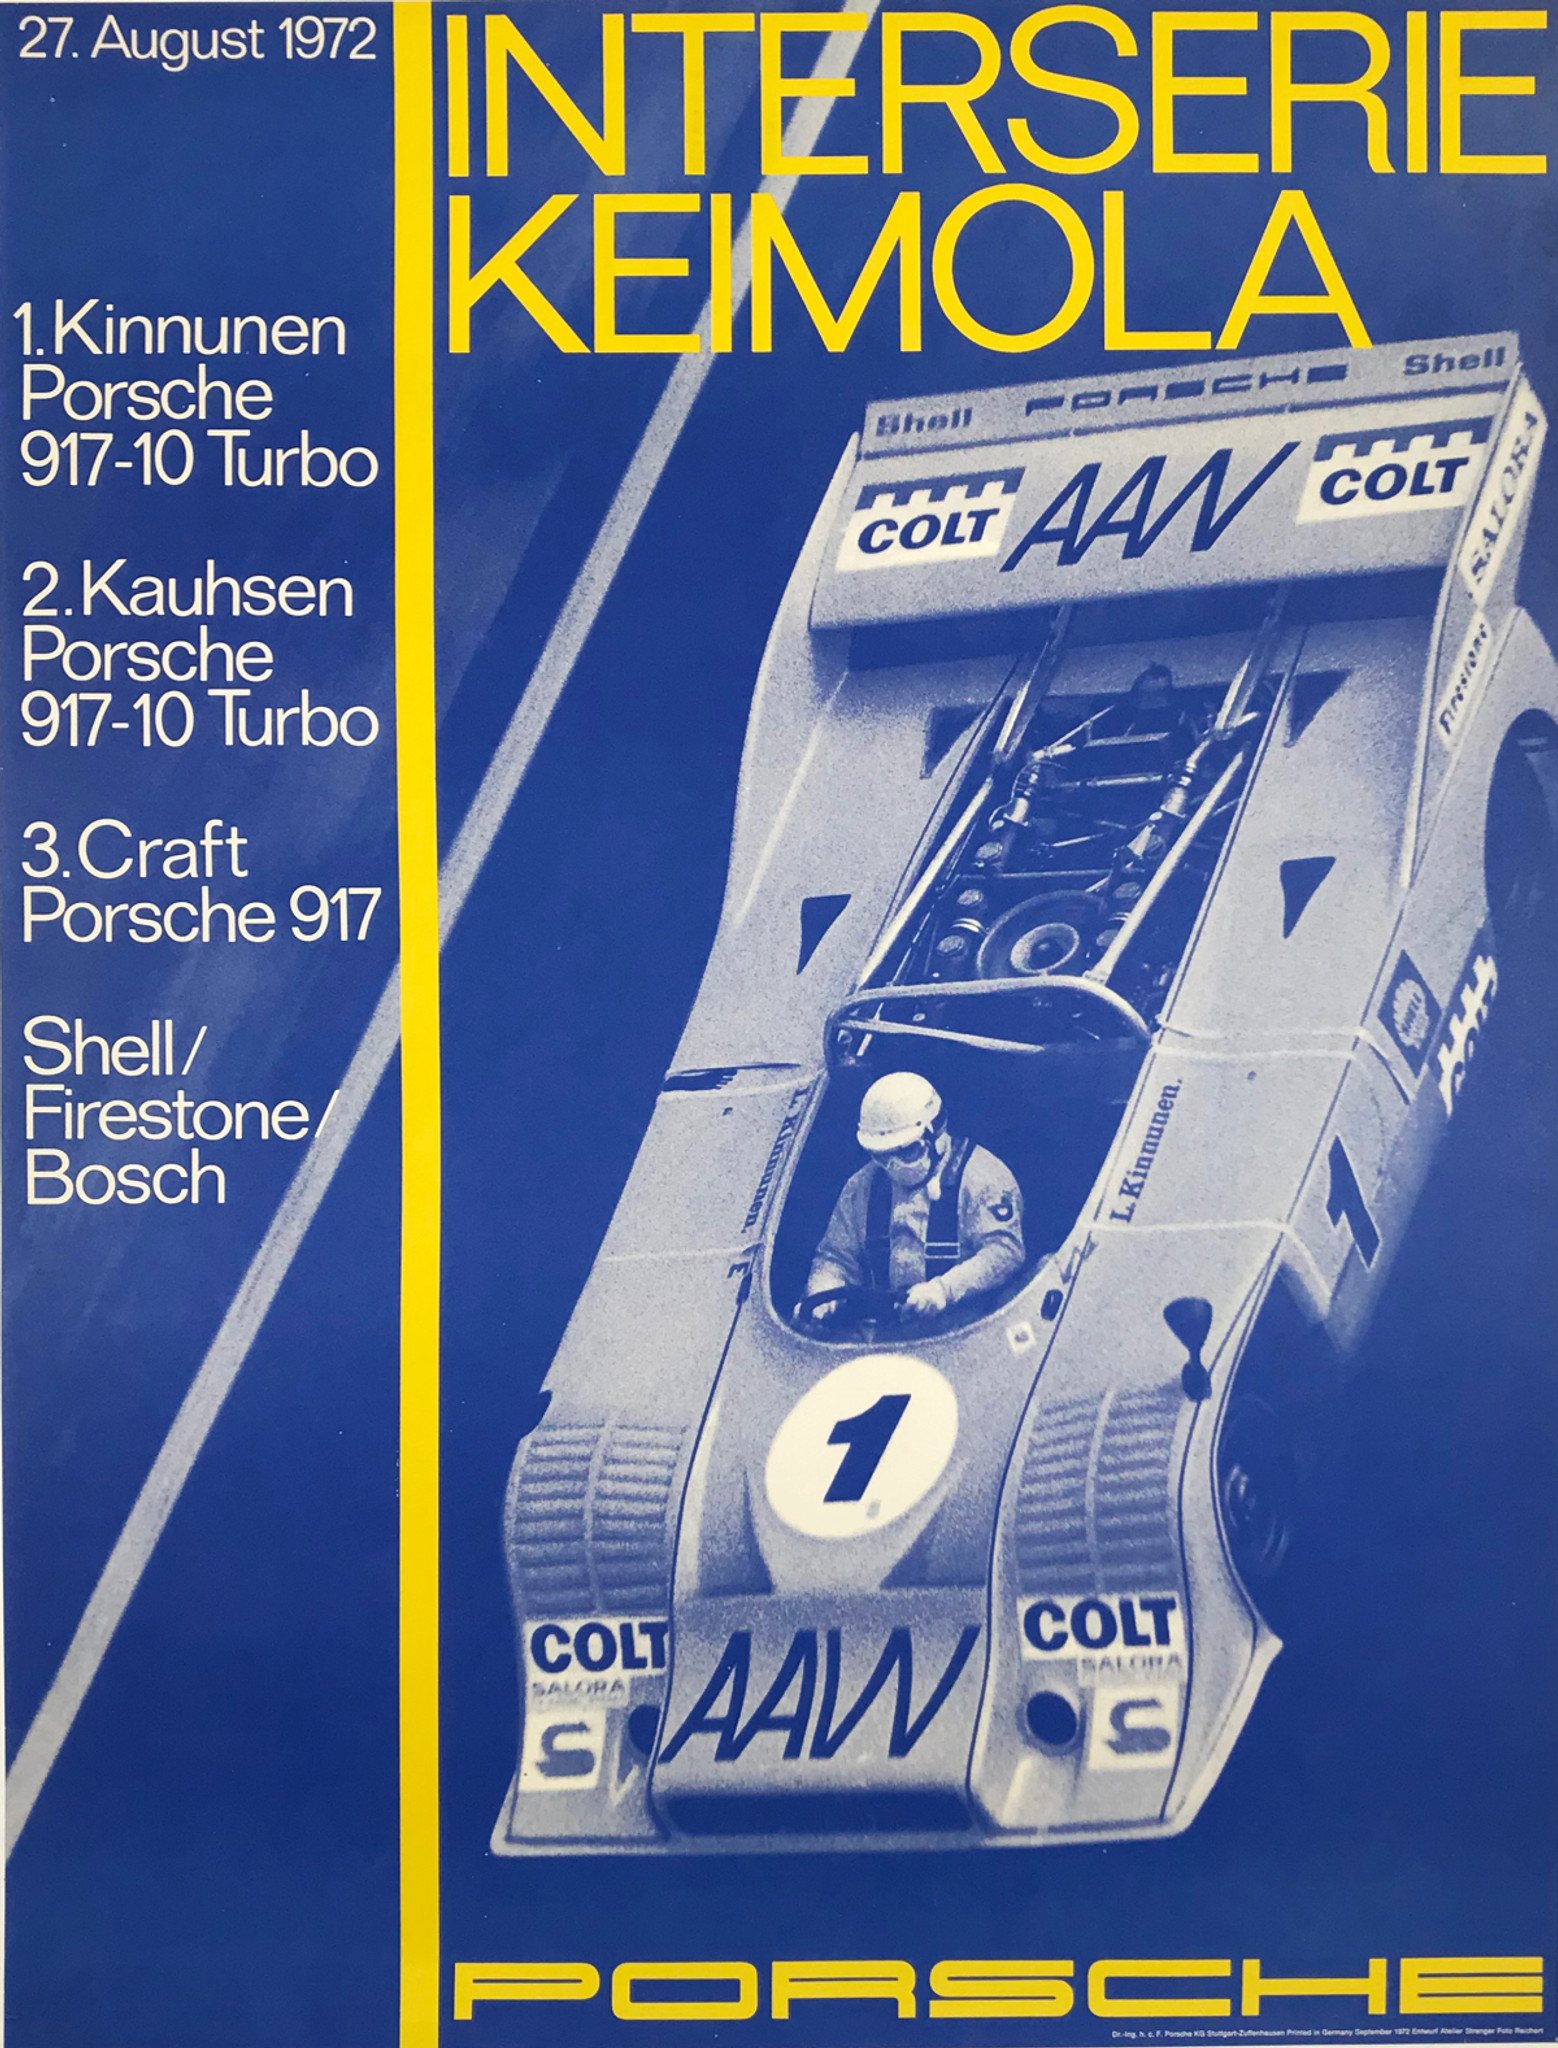 Porsche Keimola Reichert Original 1972 Vintage Strenger Printing Car Racing Promotional Advertisement Poster